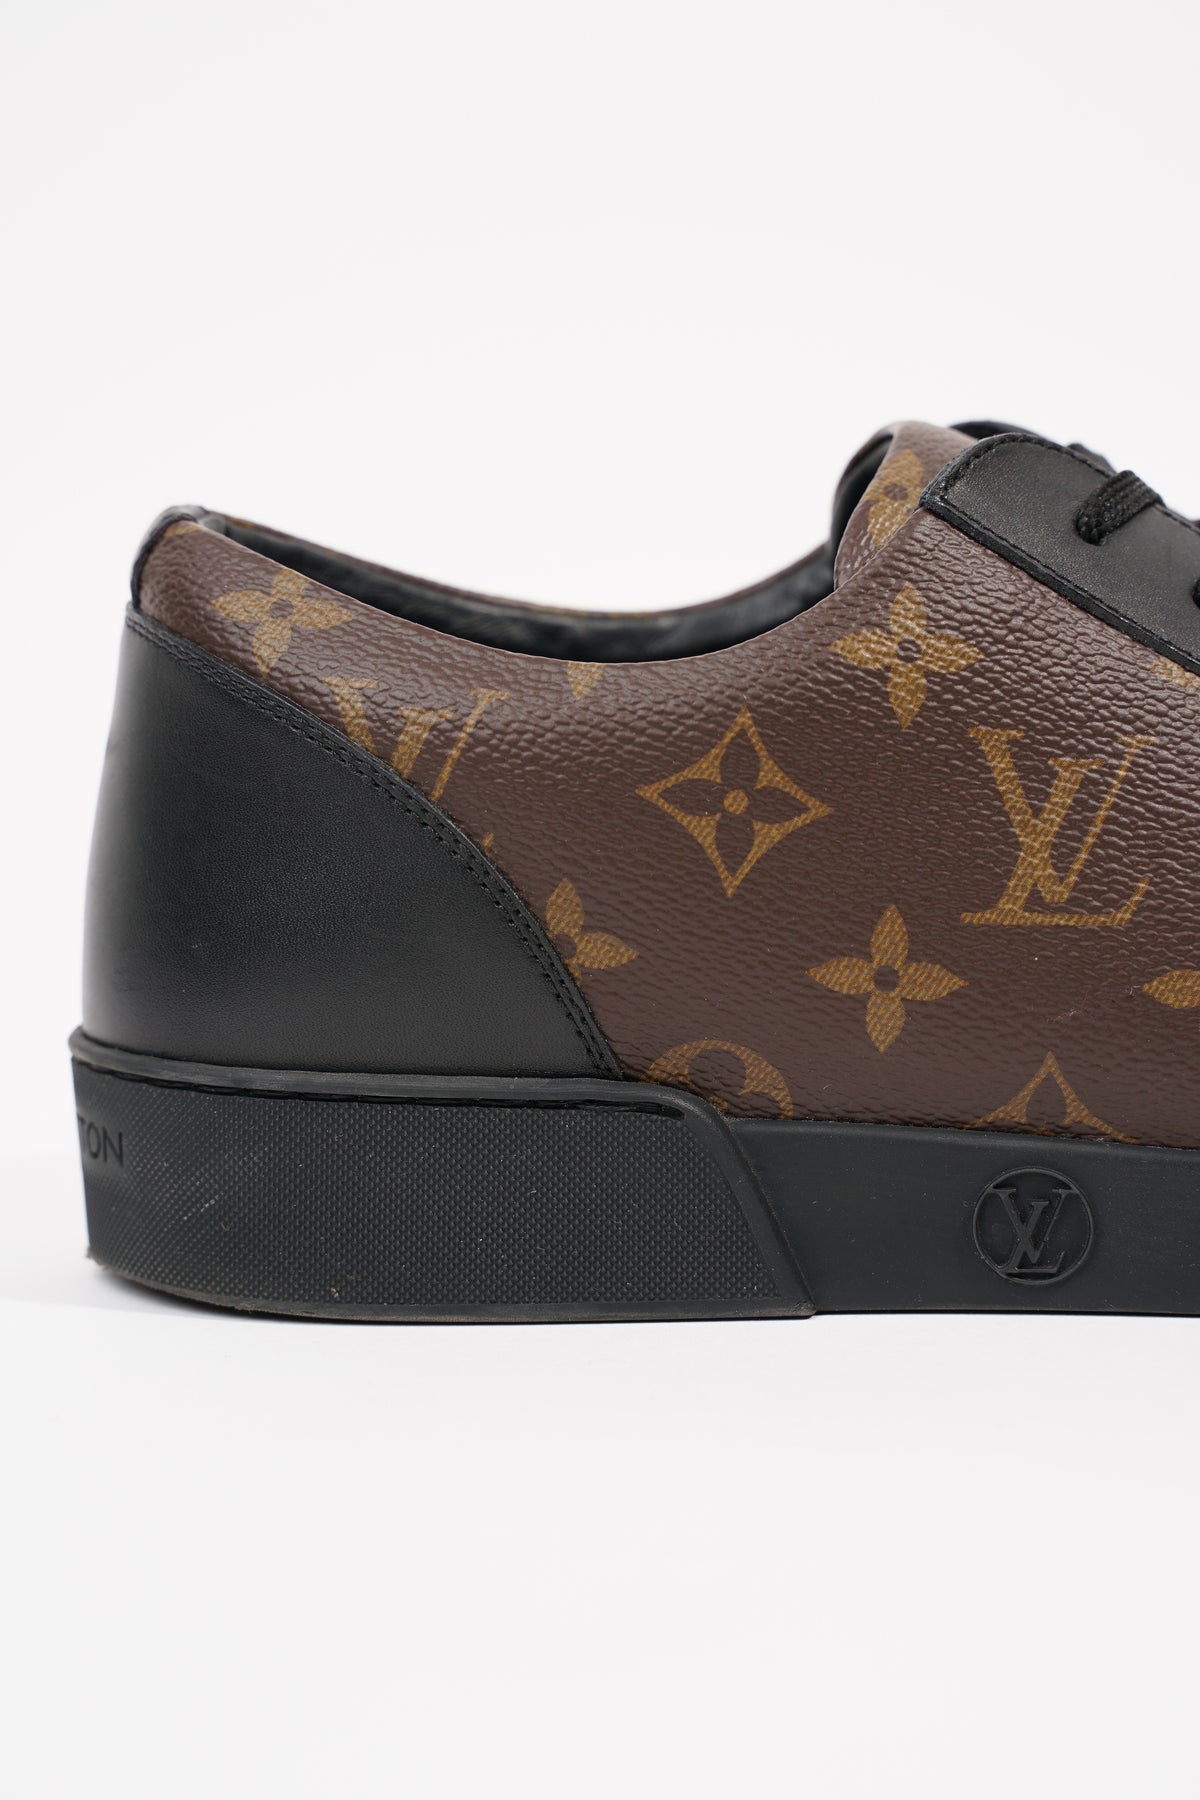 Louis Vuitton Mens Match Up Sneaker Monogram Black EU 43.5